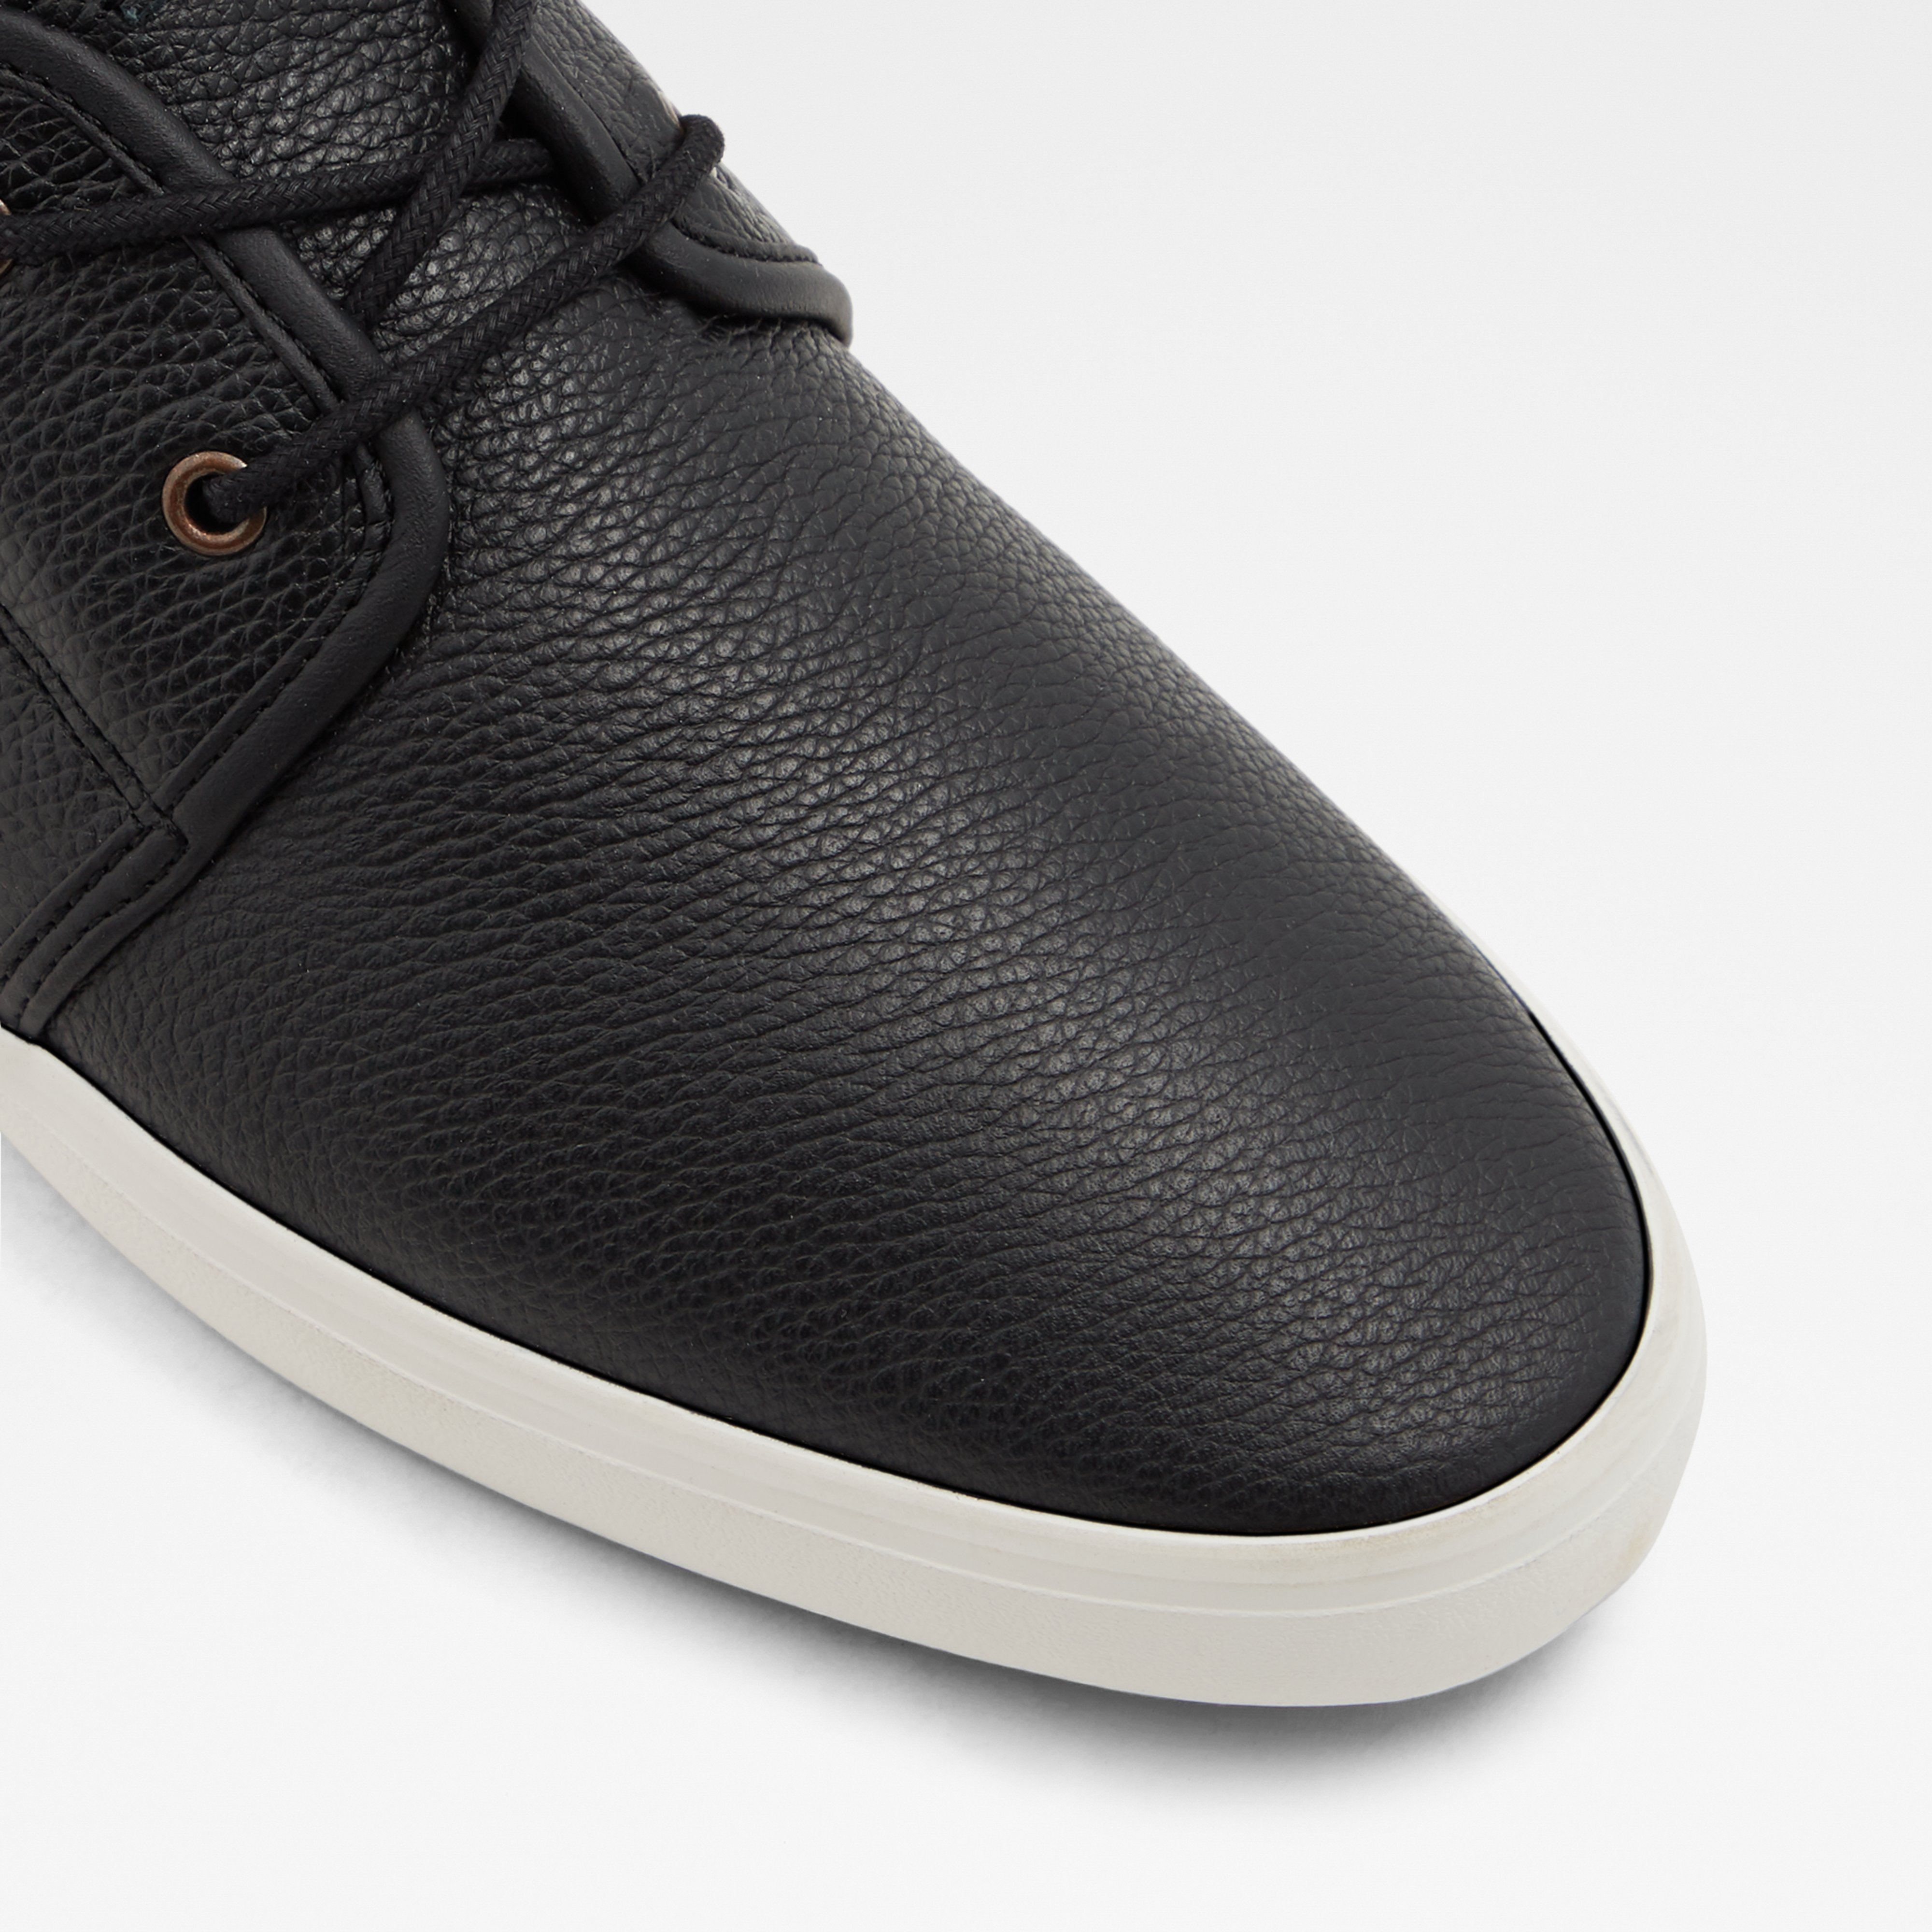 Oswy-r Black Men's Sneakers | ALDO US